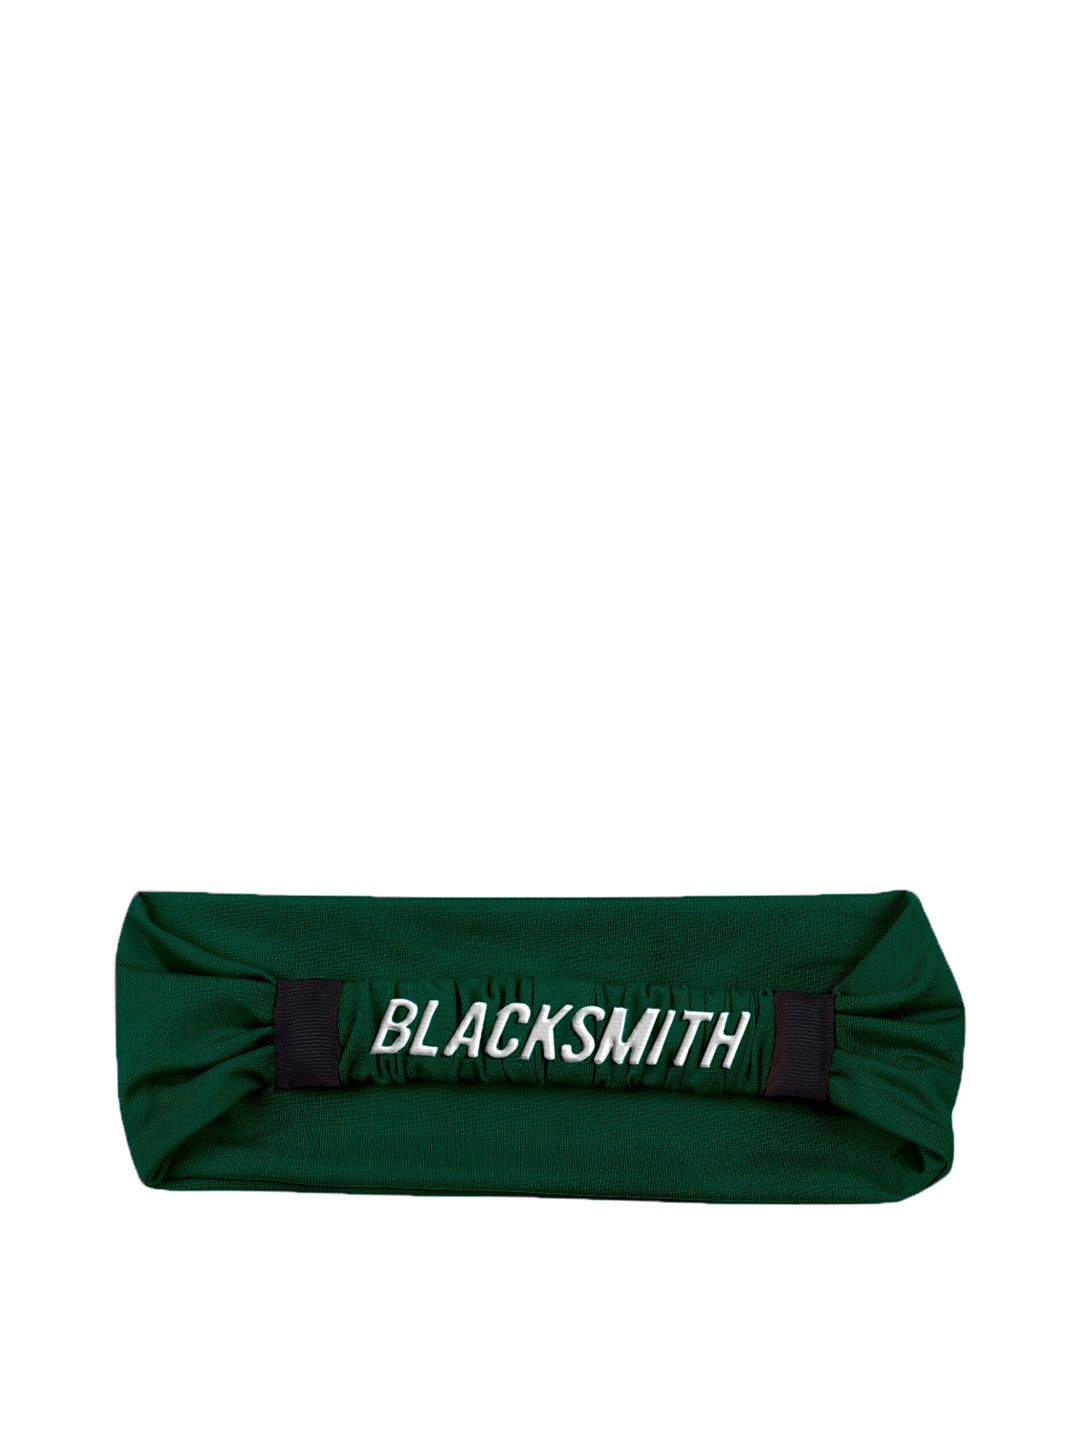 Blacksmith Green Solid Headband Price in India